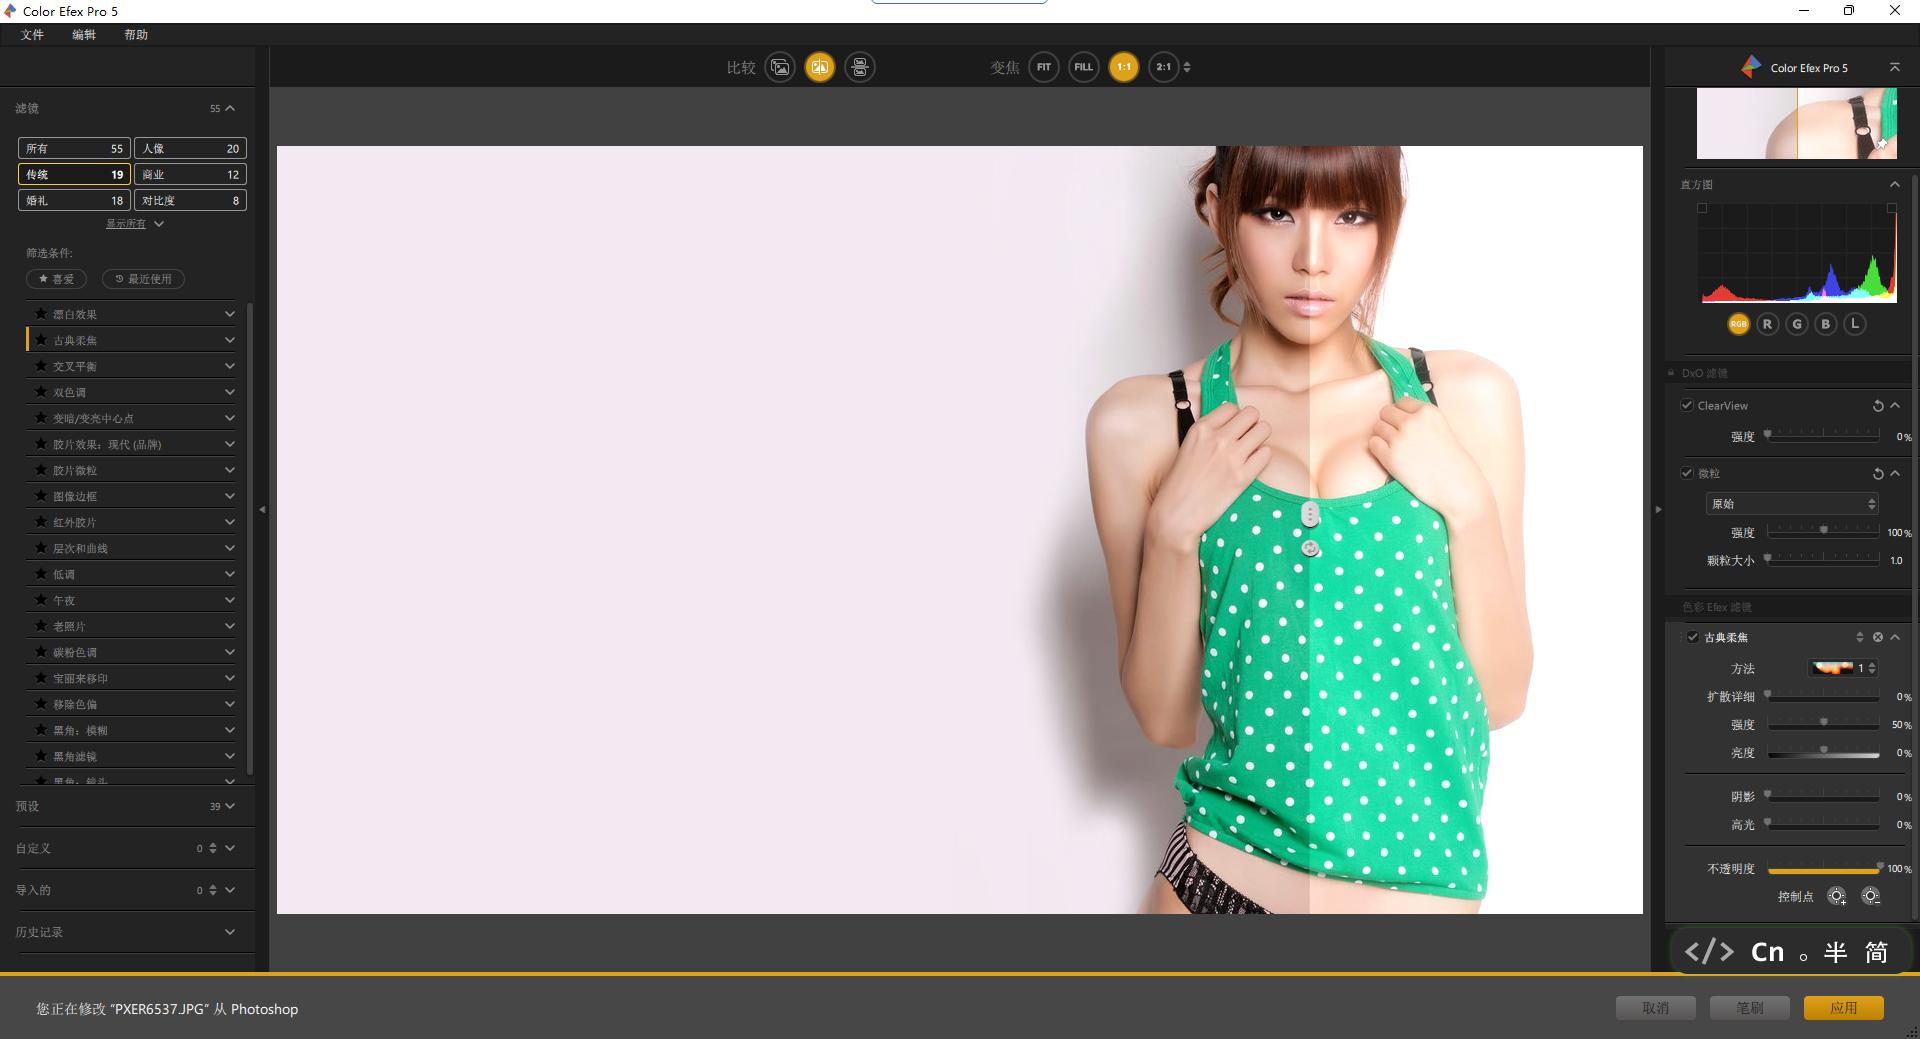 Photoshop 增强滤镜 DxO Nik Collection 5.2.0.0 x64 中文免费版-微分享自媒体驿站